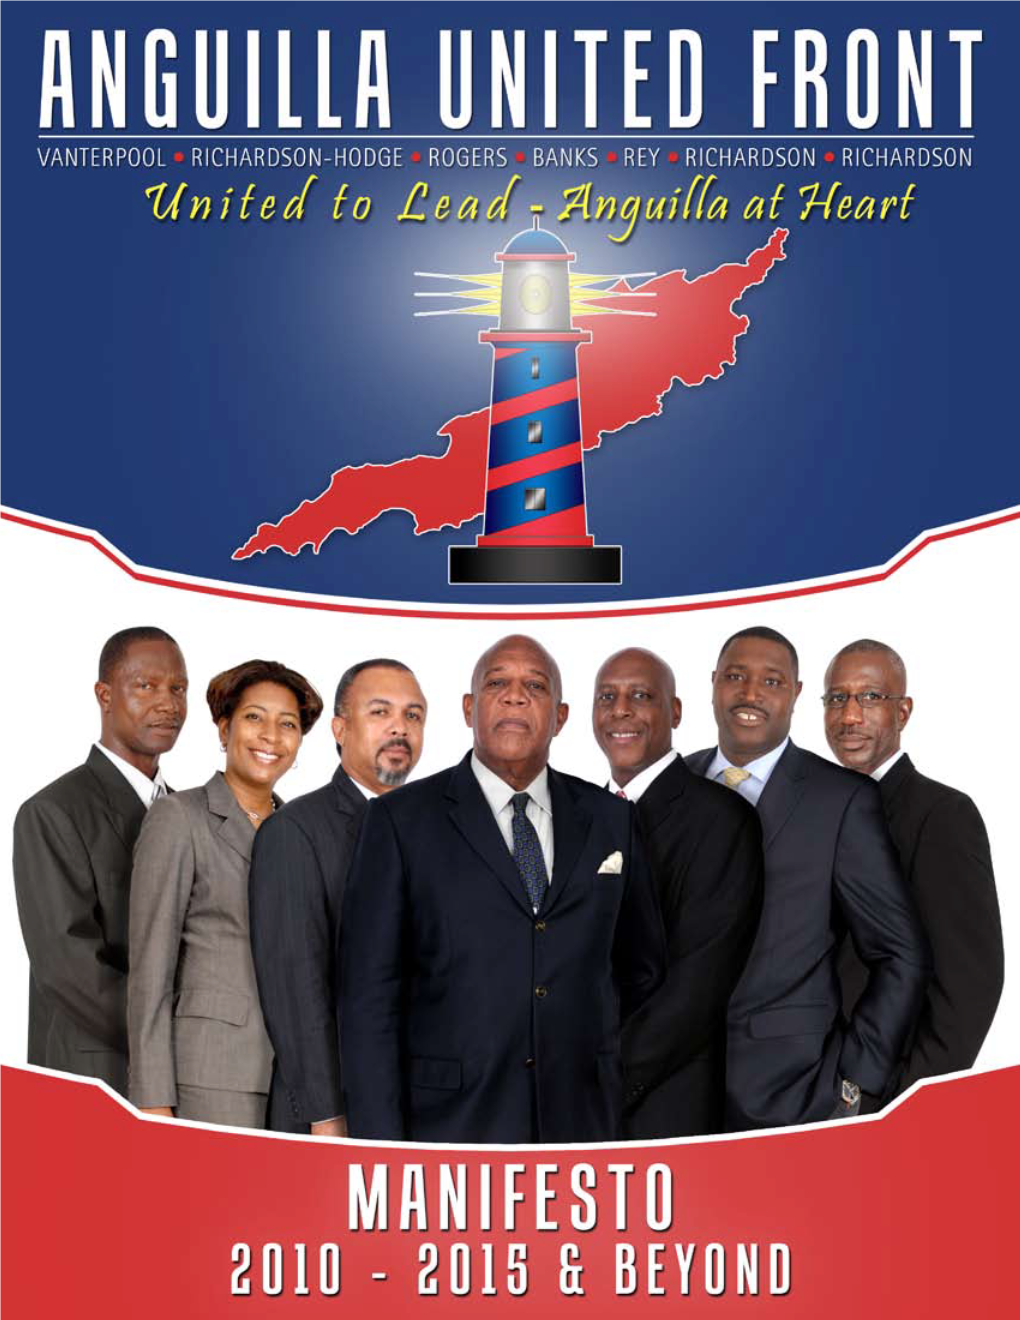 Anguilla United Front Manifesto